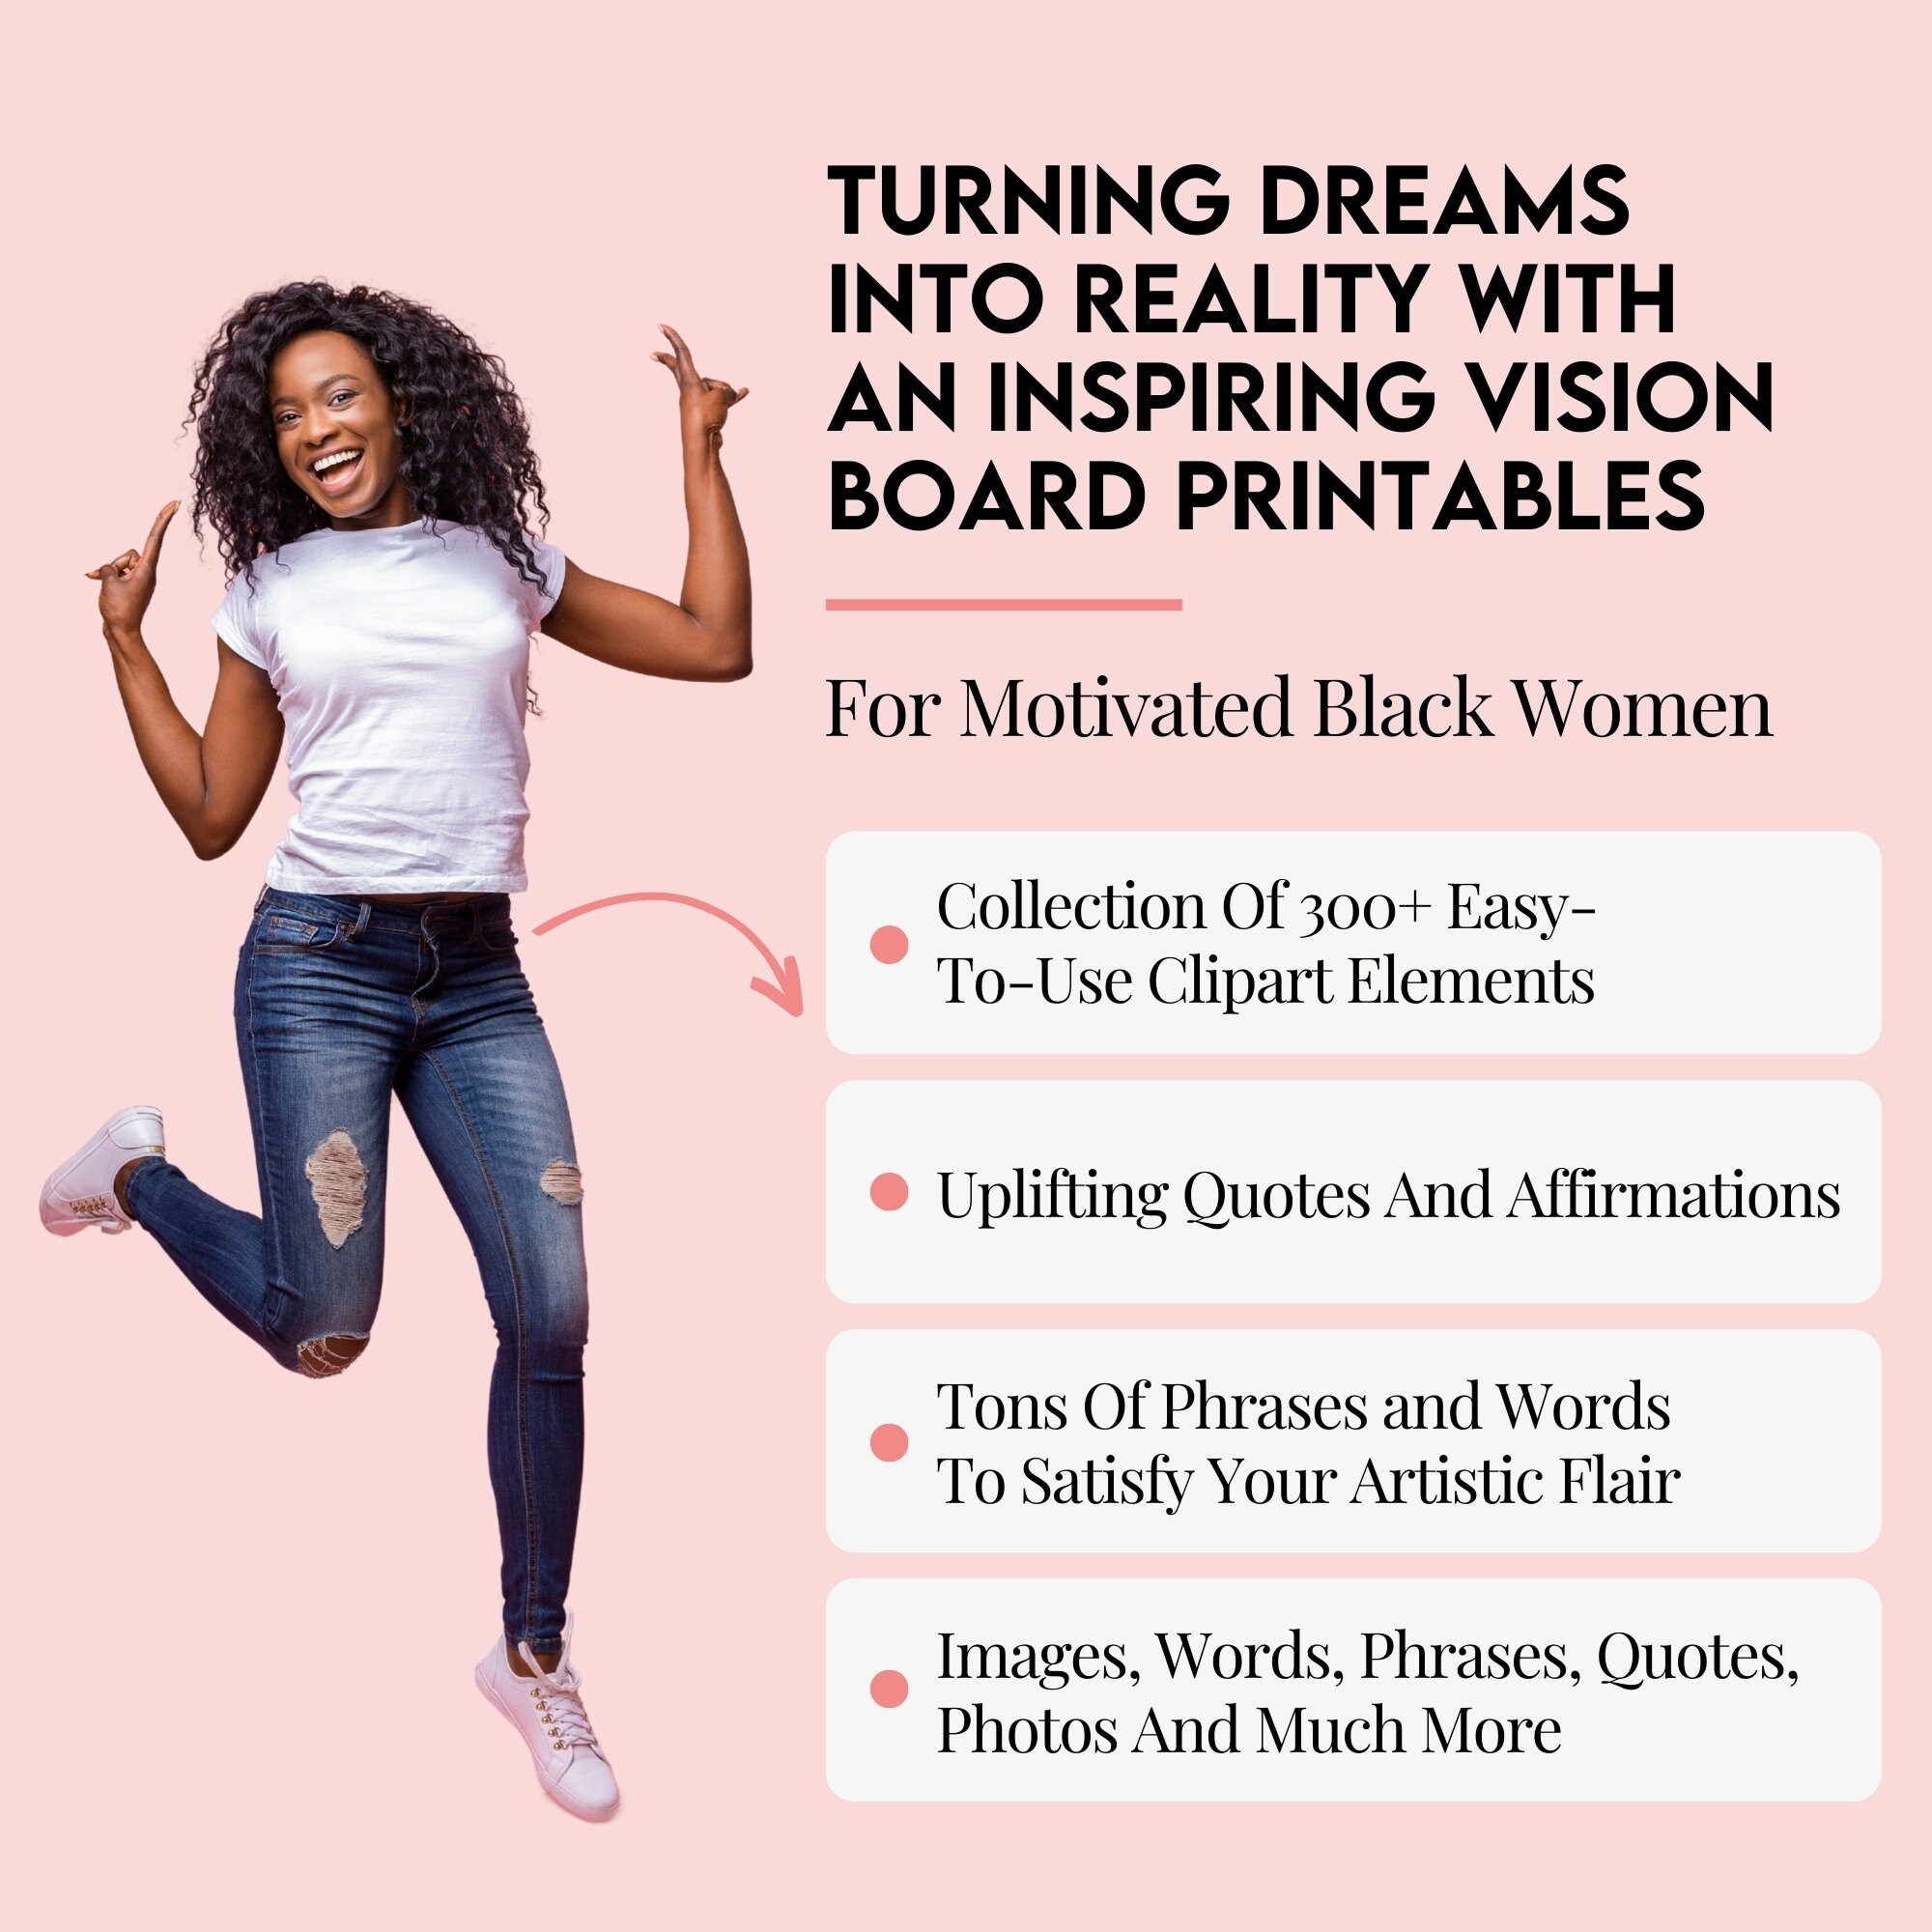 Affirmation Vision Board Kit for Little Black Girls! Available at